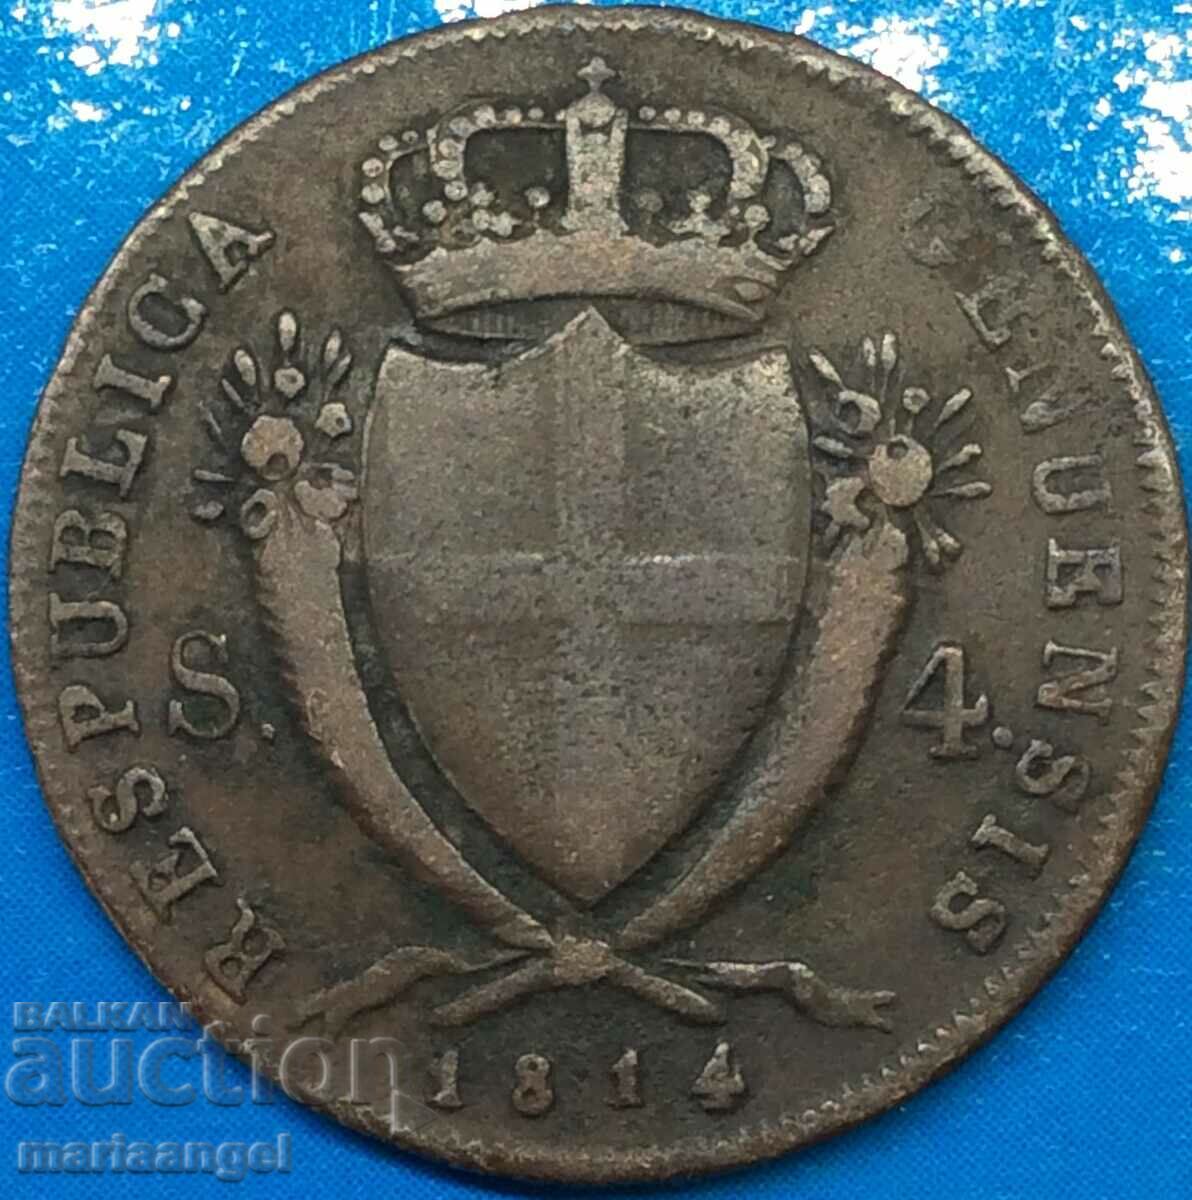 Genoa 4 soldi 1814 Italy med